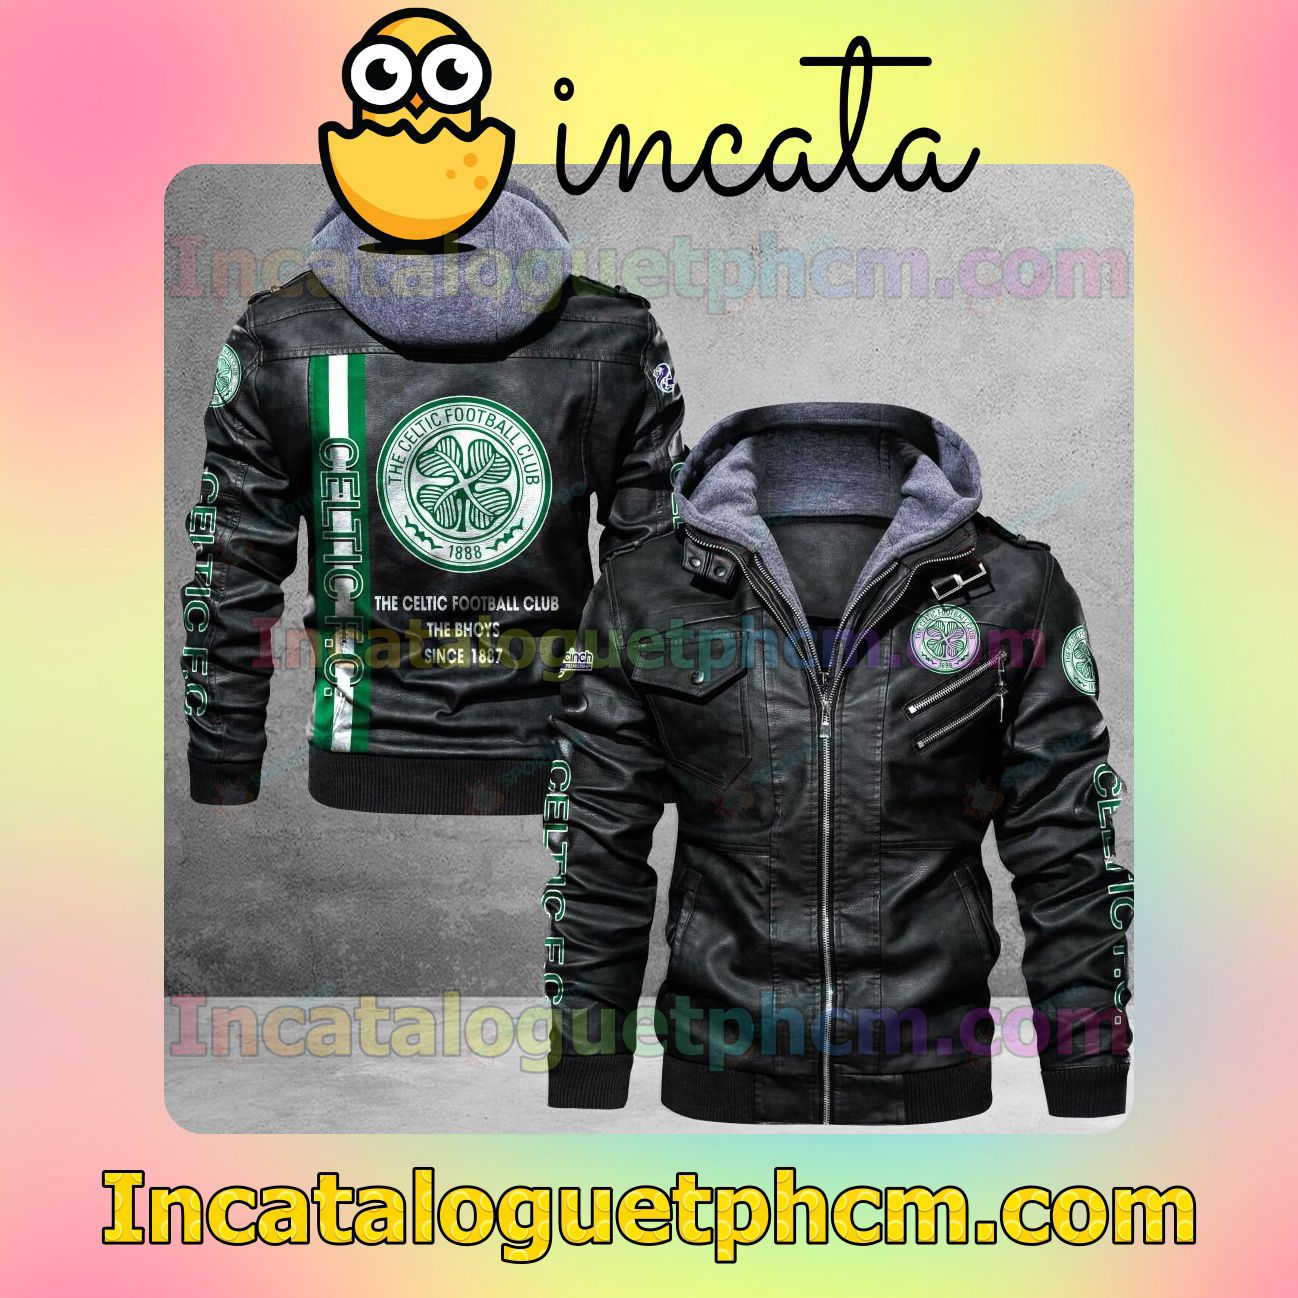 Celtic F.C. Brand Uniform Leather Jacket